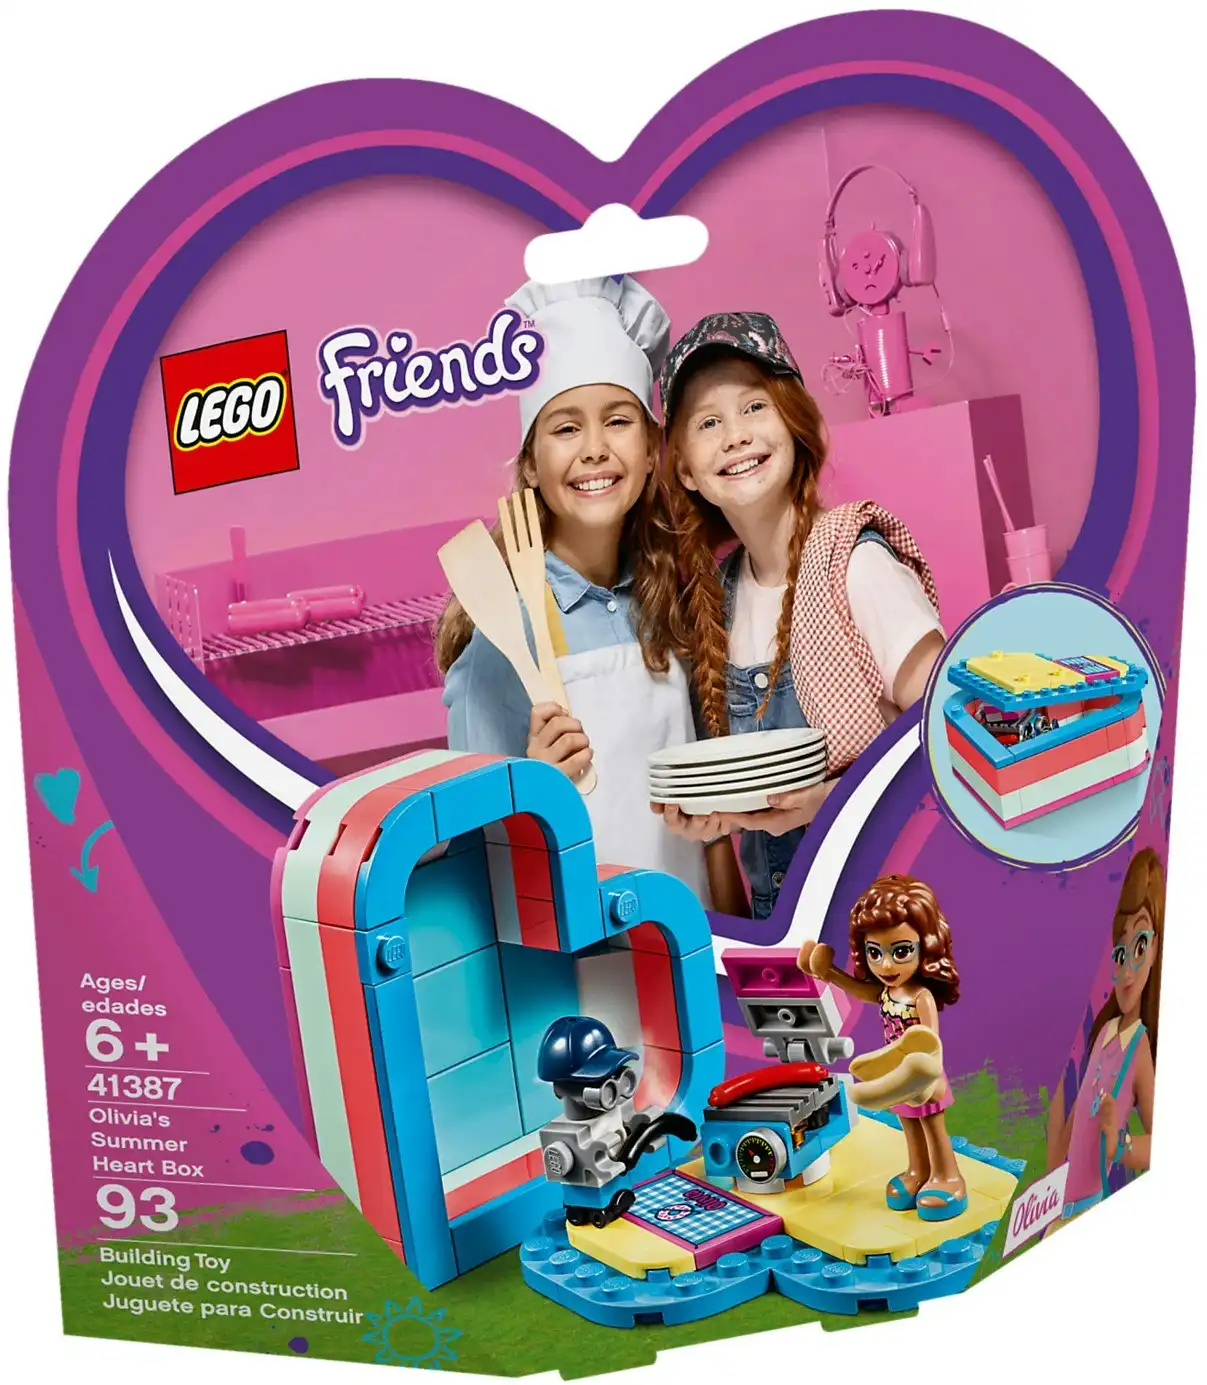 LEGO 41387 Olivia's Summer Heart Box - Friends